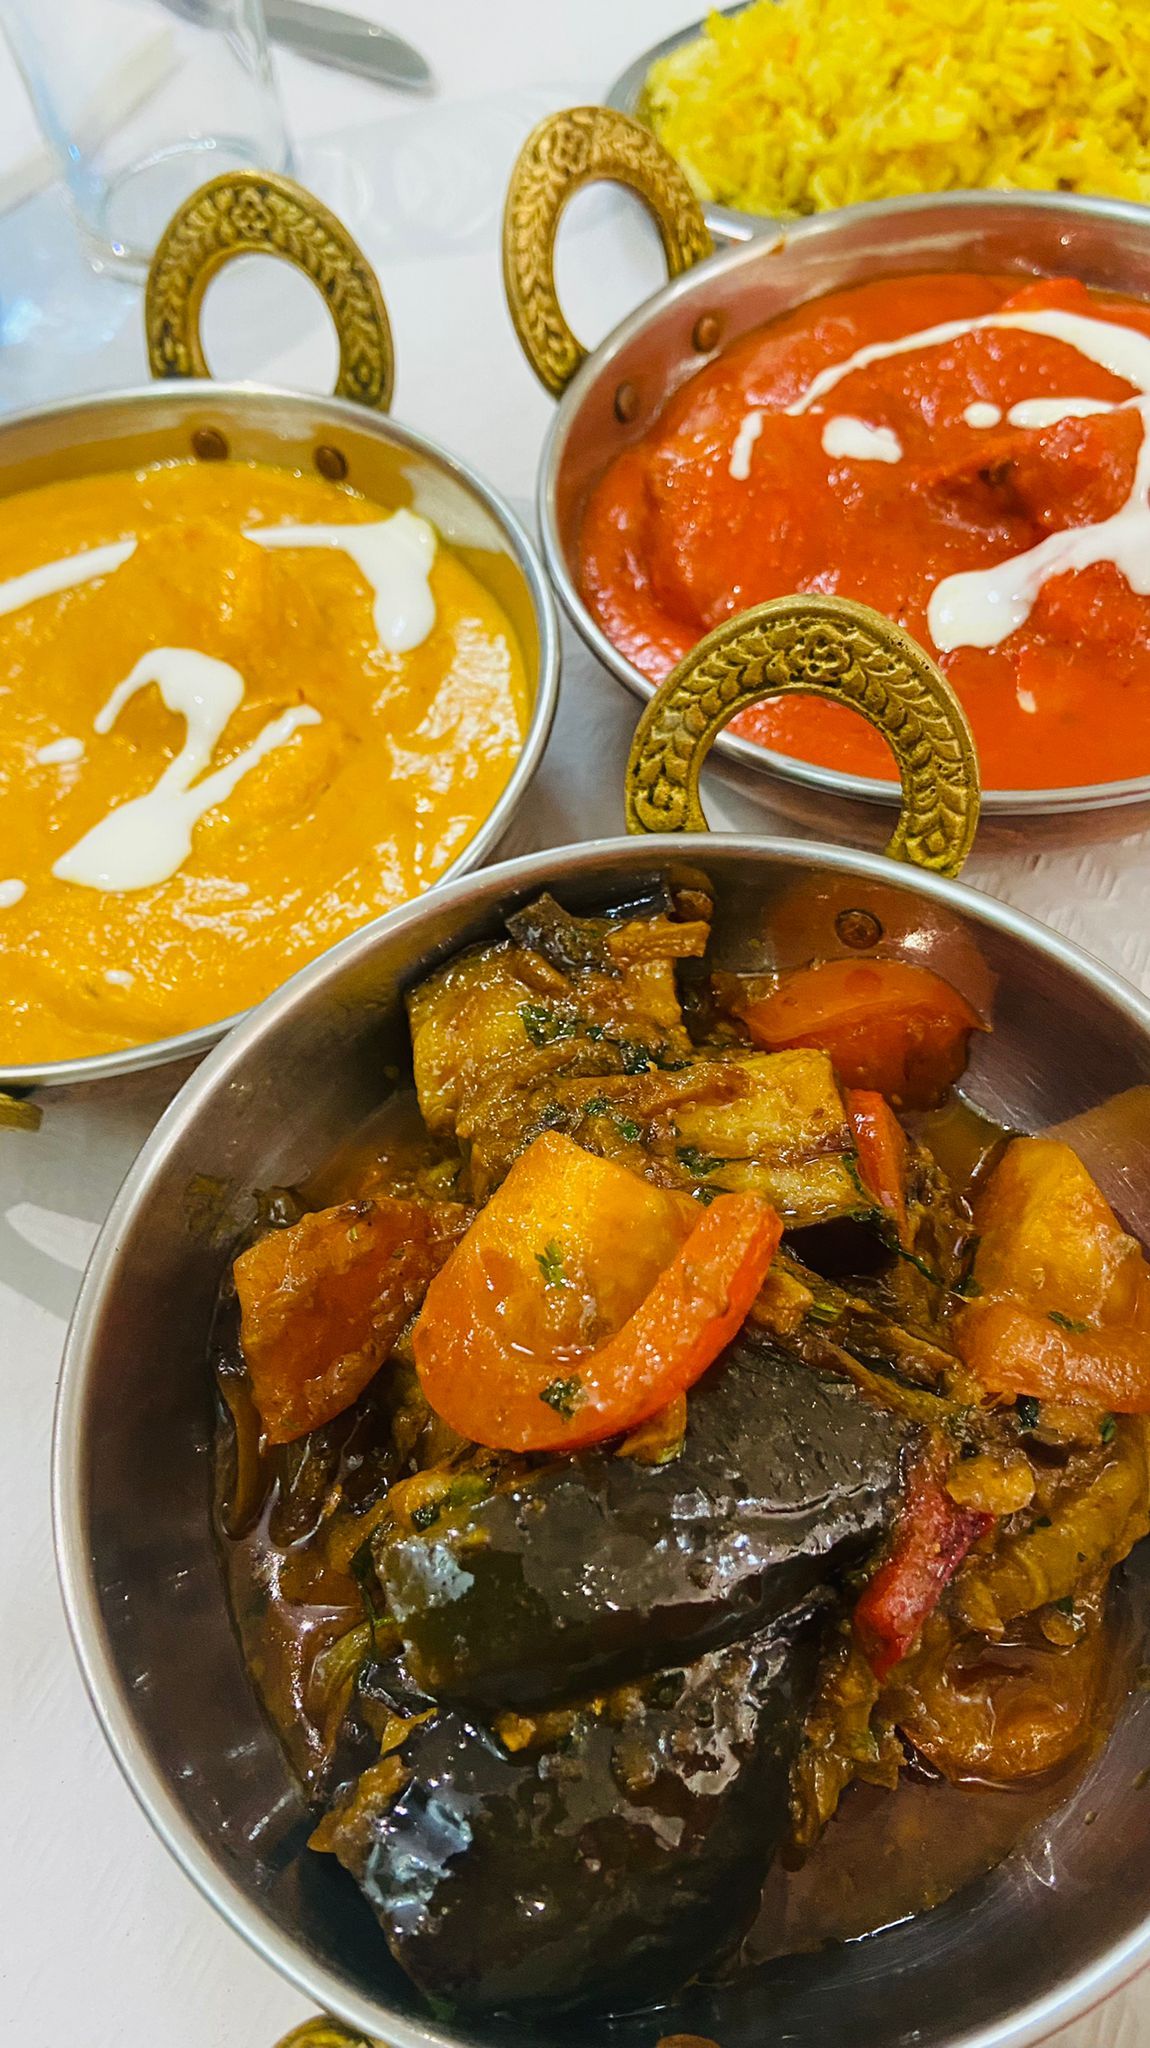 Tandoori House - Indian Restaurant